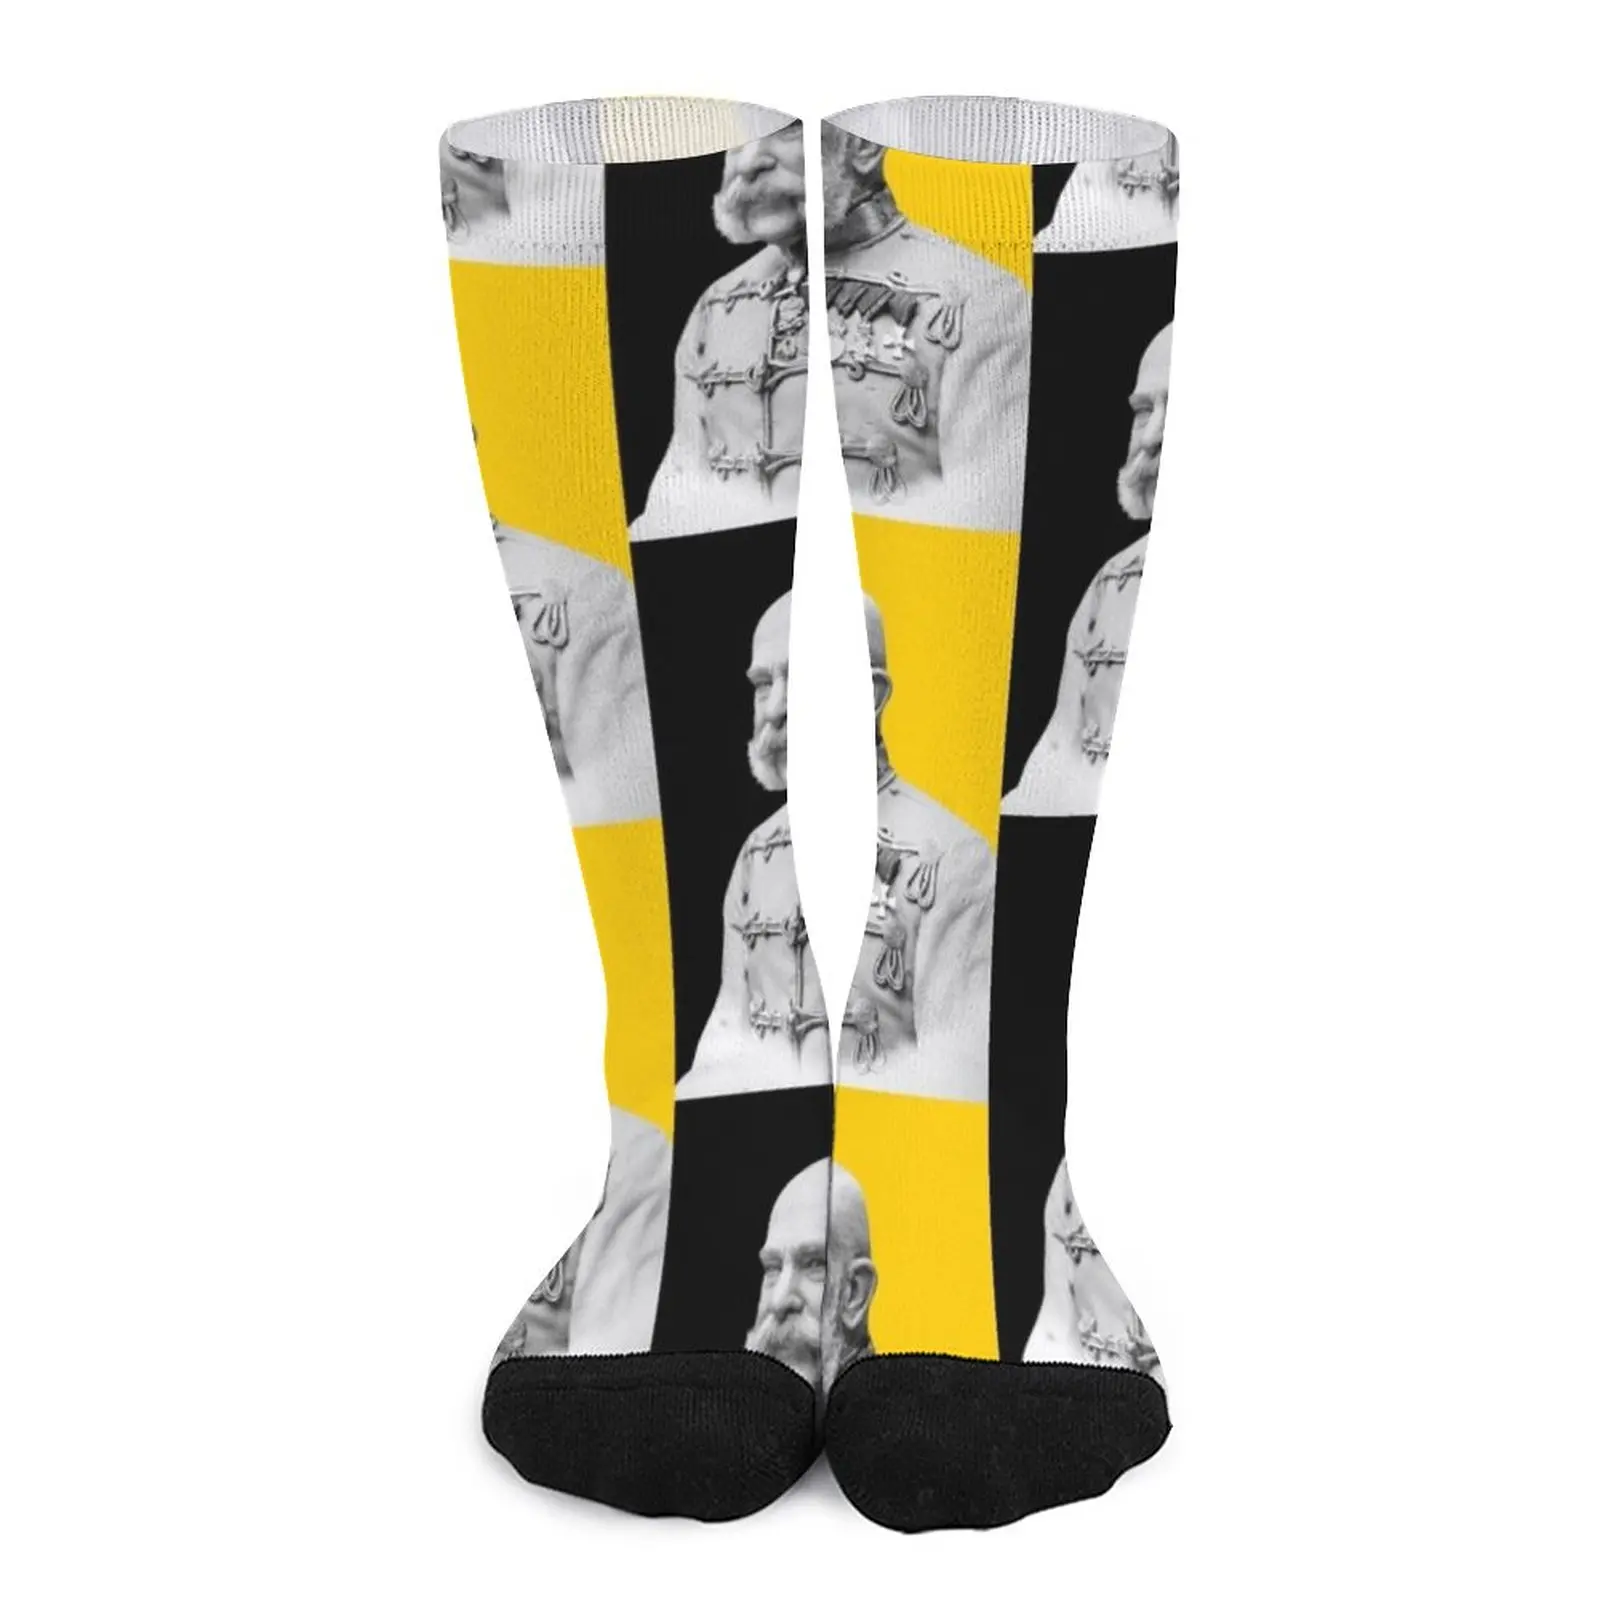 Franz Joseph I of Austria with Flag Socks Crossfit socks heated socks joseph anton